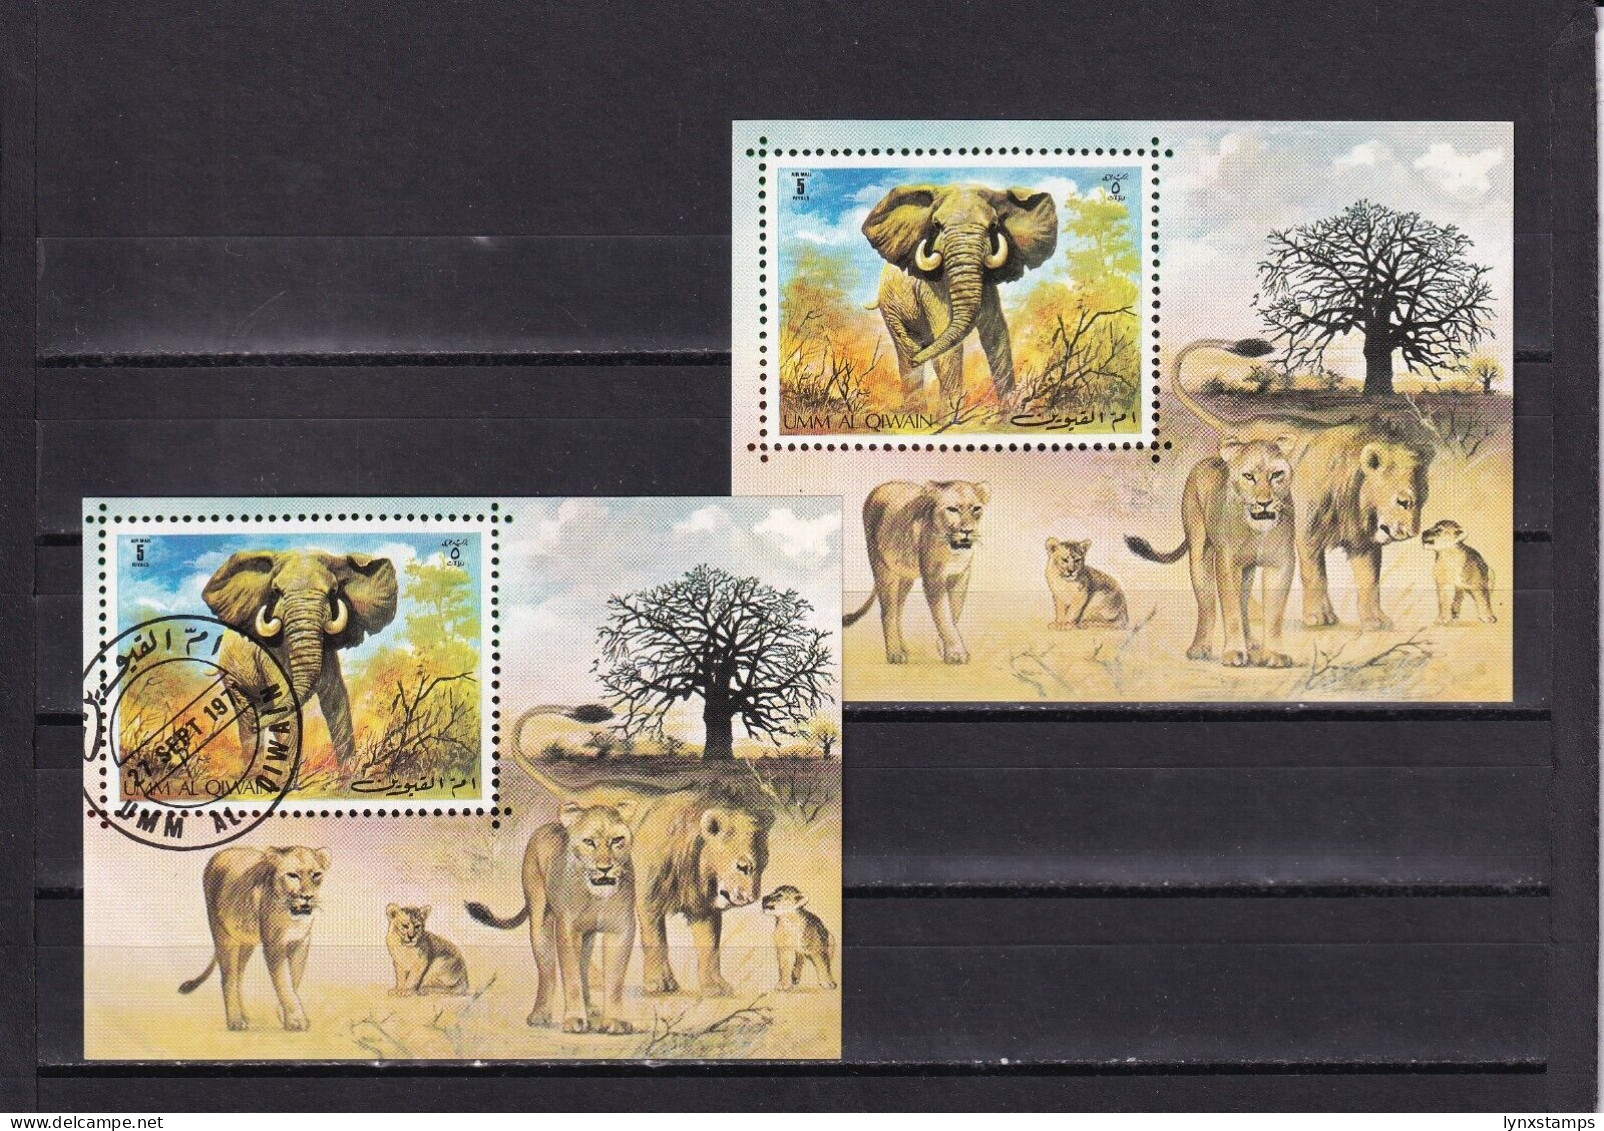 SA03 Umm Al Qiwain UAE 1971 Minisheet With Elephants Used And Mint - Elefanten